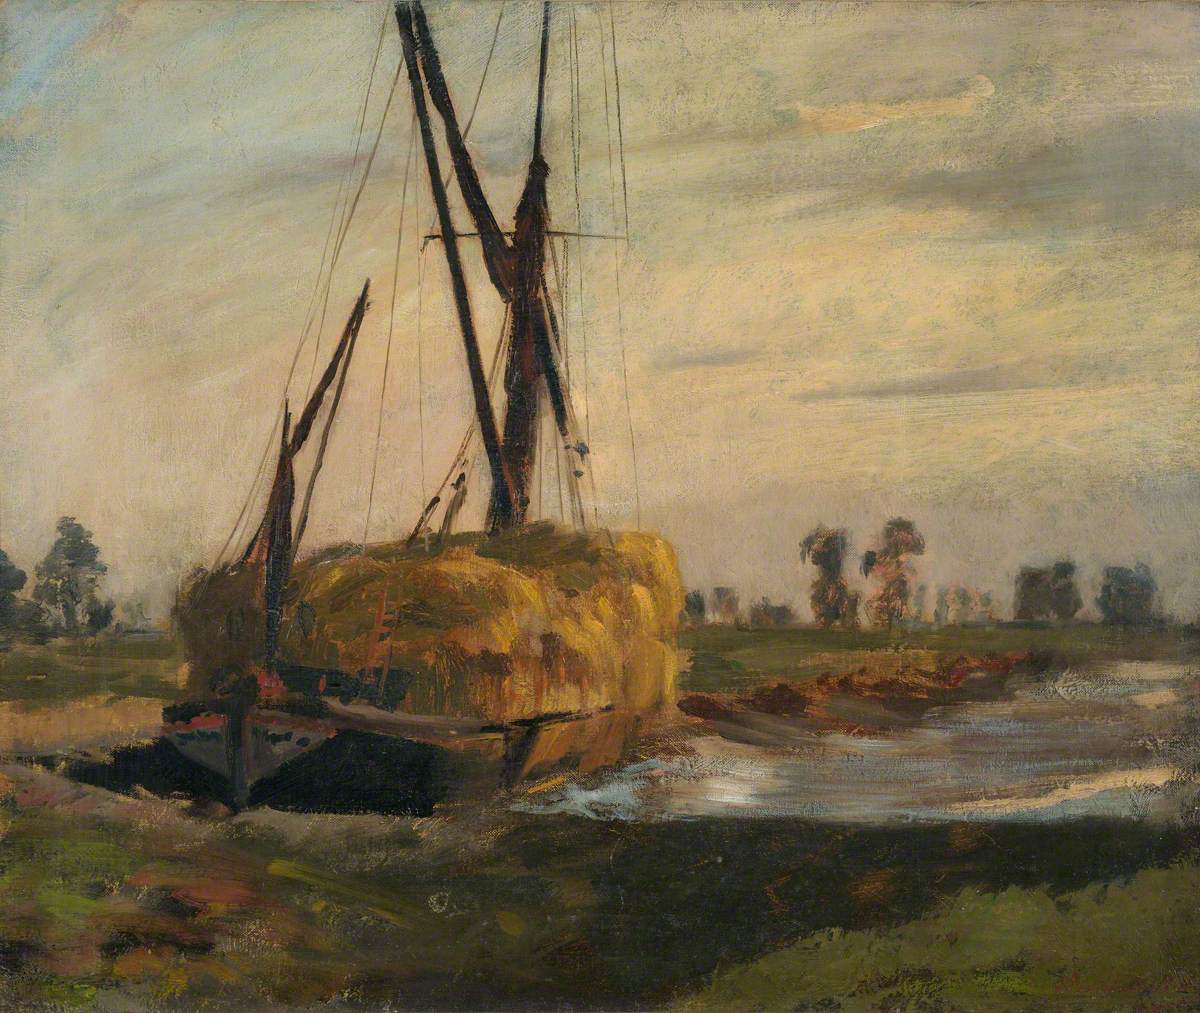 The Hay Boat